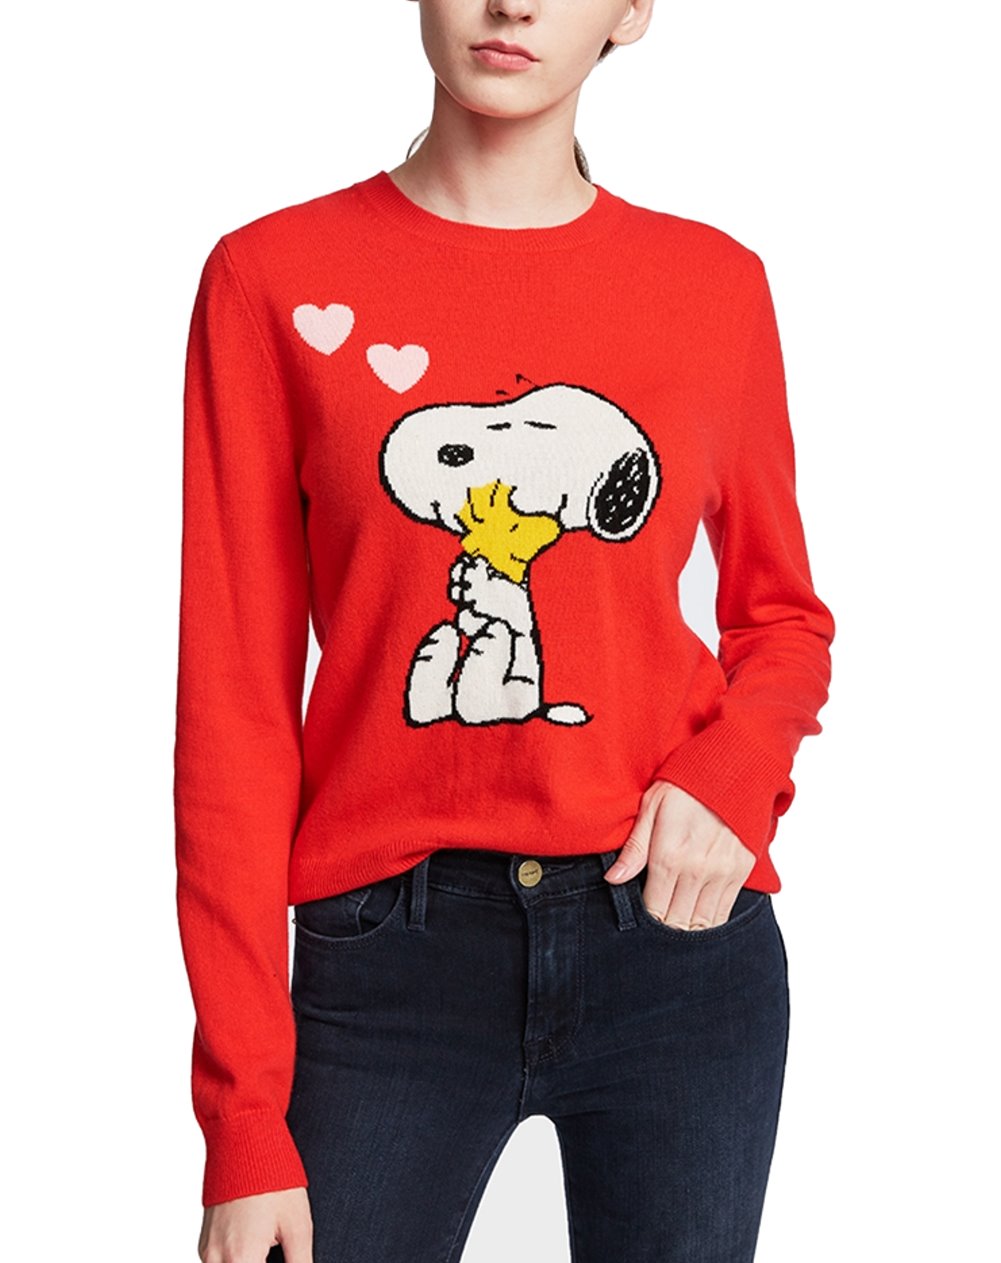 Women S Round Neck Snoopy Character Border Sweater Pullover ラウンドネック スヌーピーセーター プルオーバー